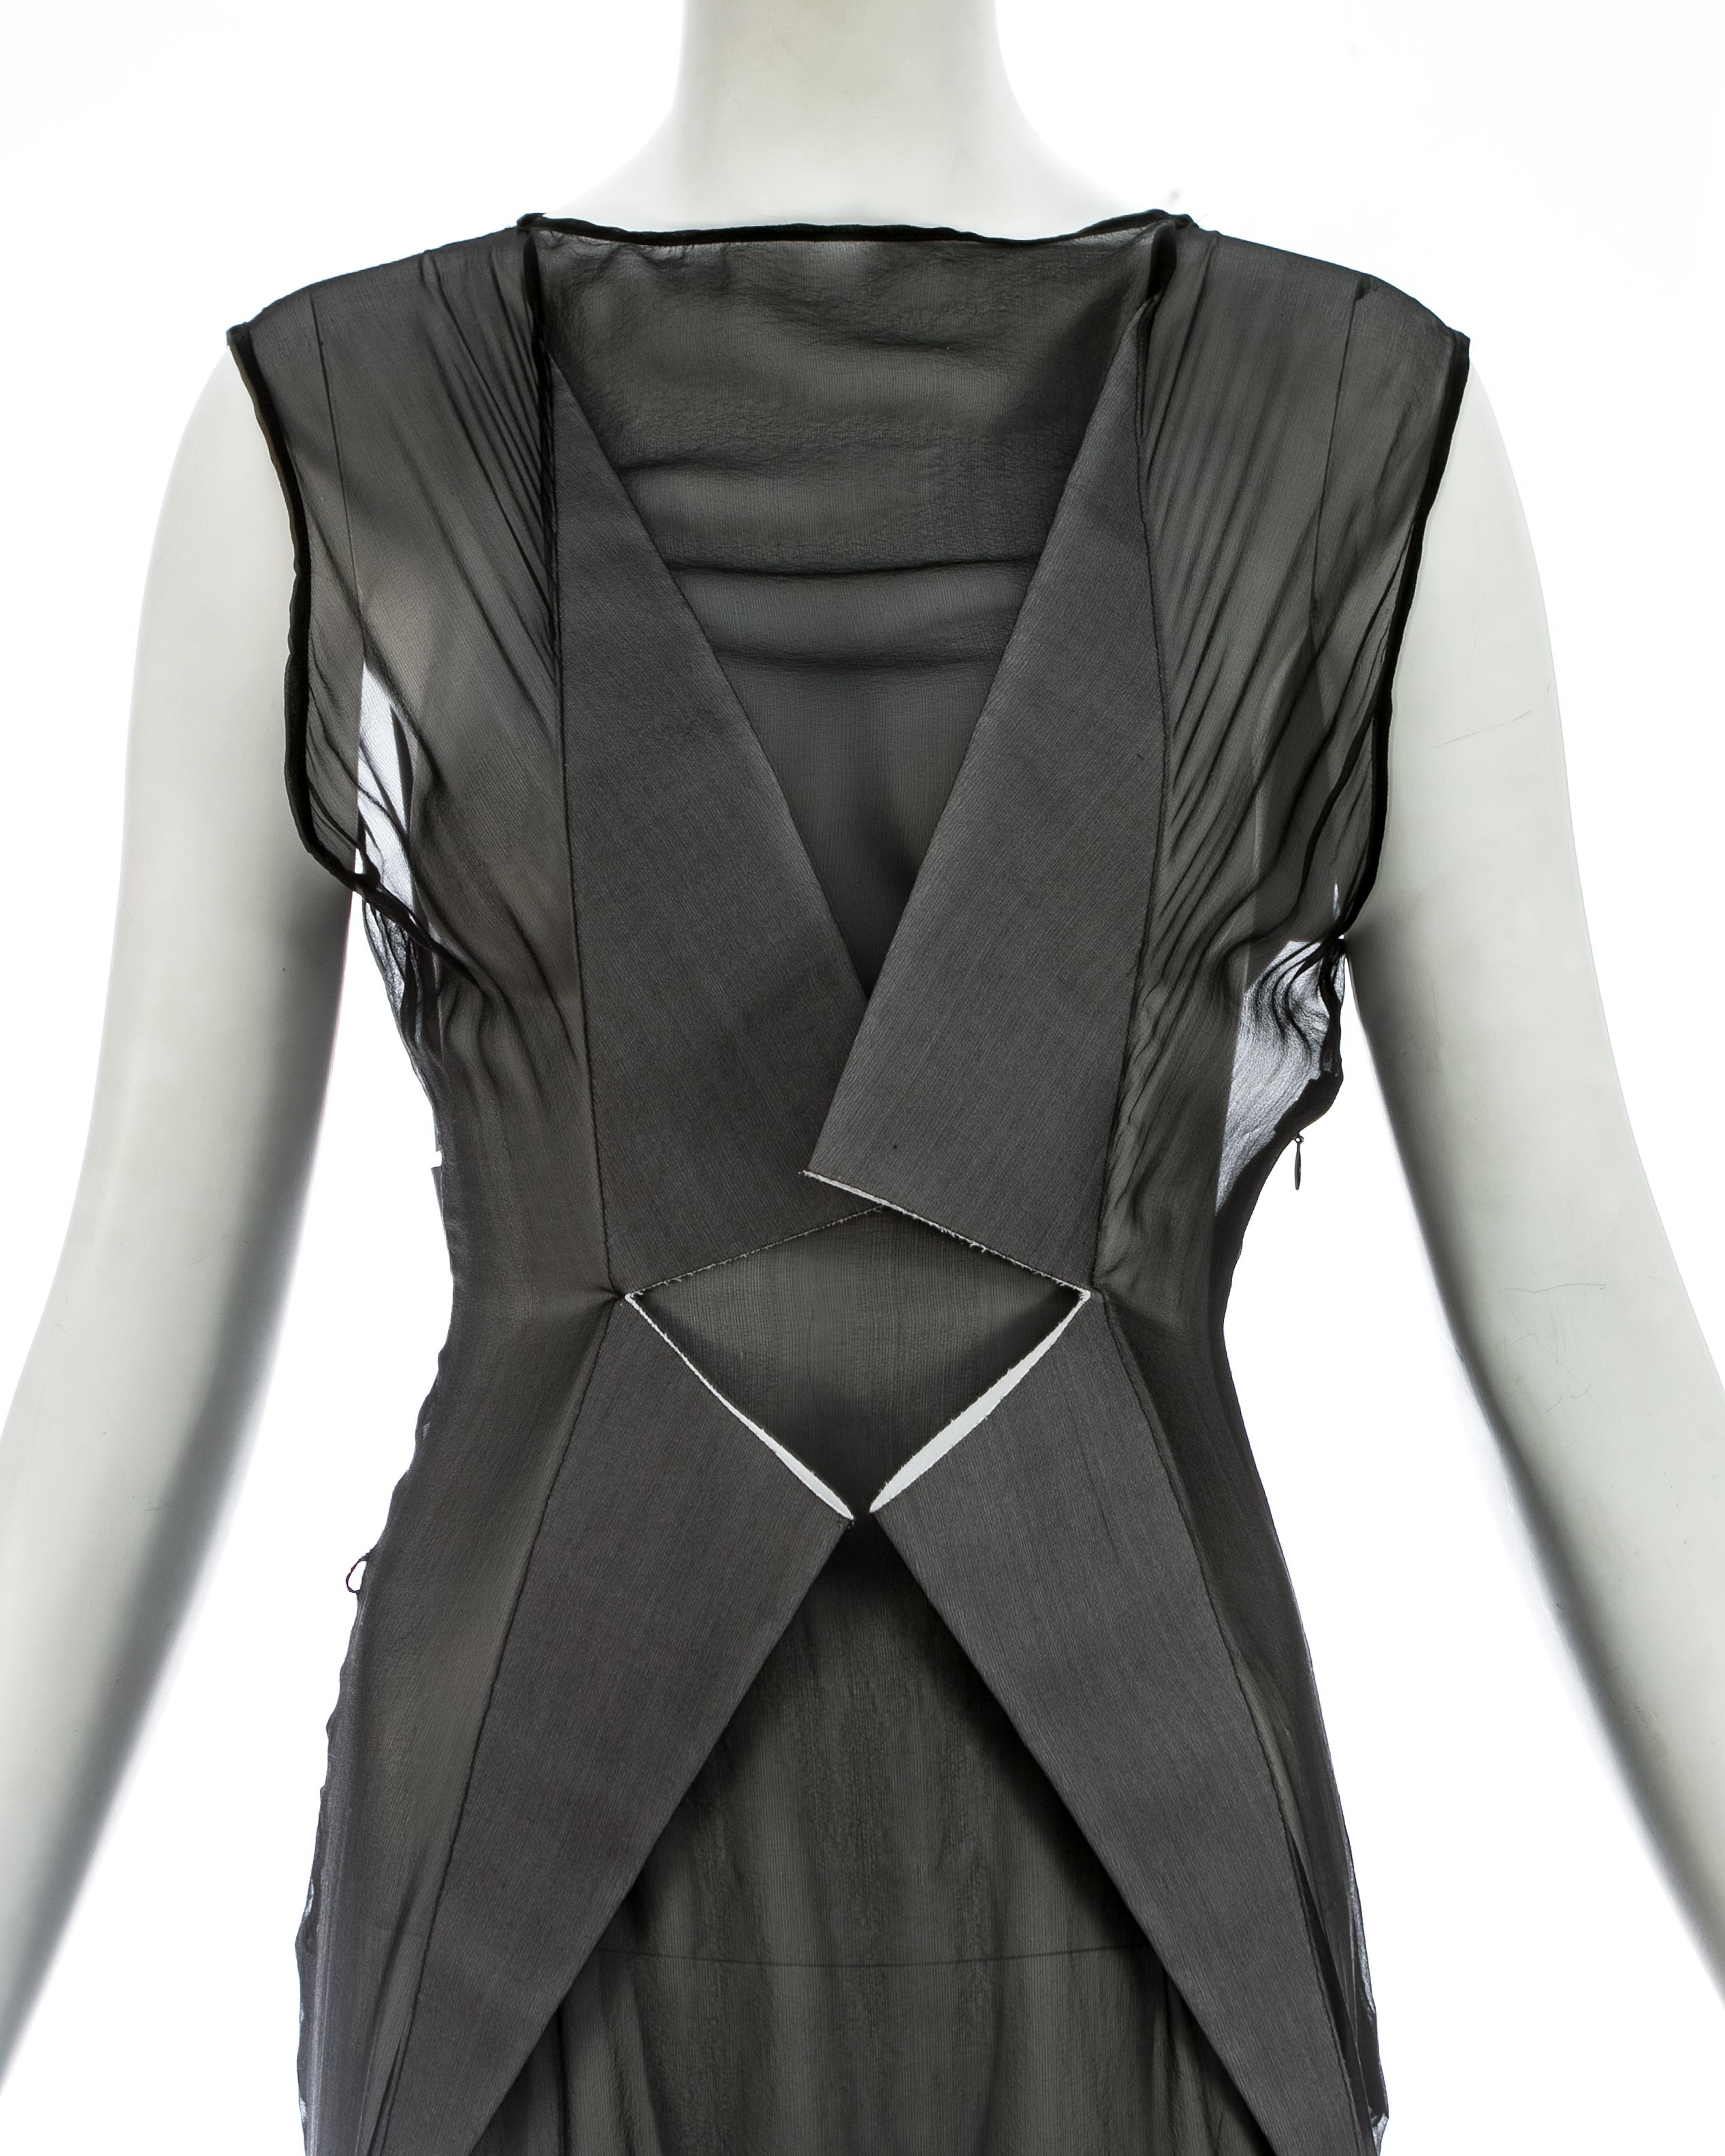 Women's Martin Margiela black silk chiffon evening dress with metal chain hem, ca. 2010